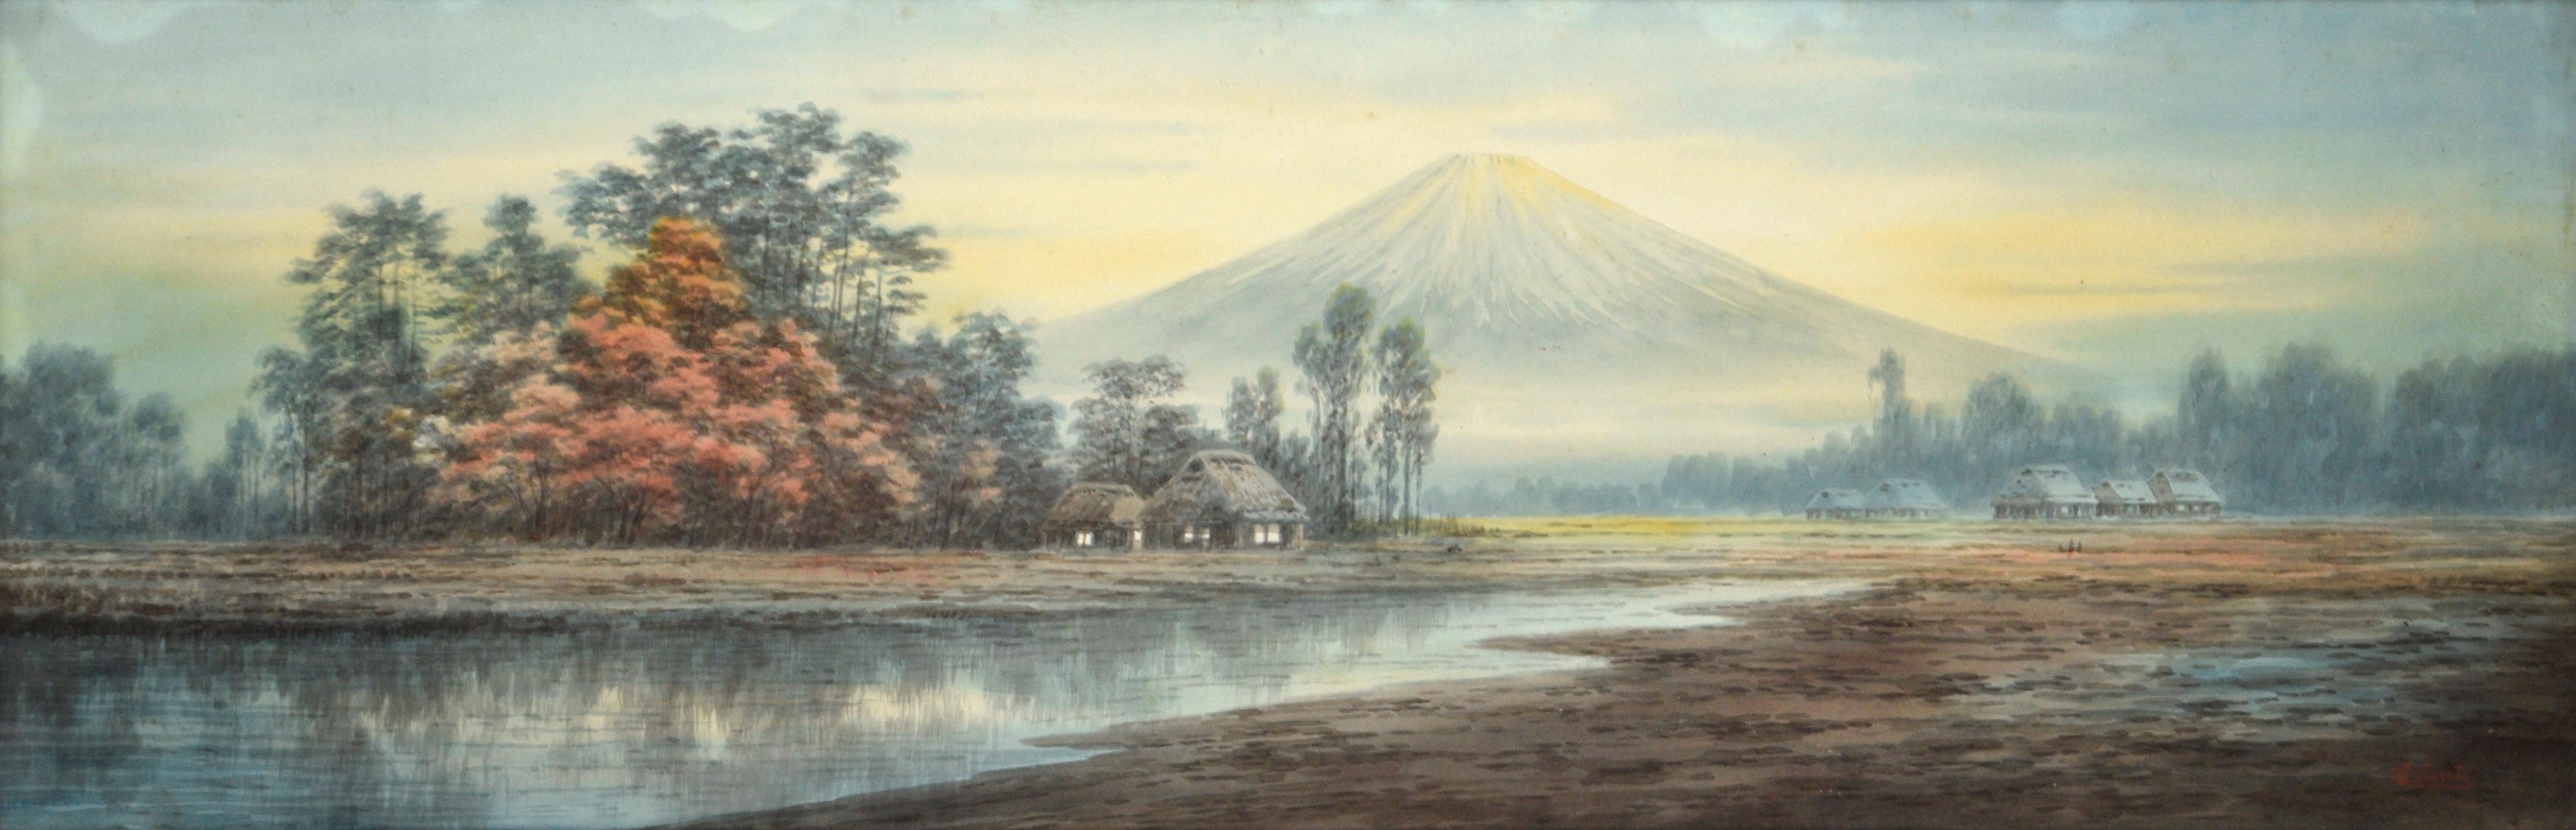 Sunrise Over Mt. Fuji, Japanese Watercolor Landscape - Art by Emiko Satsuta